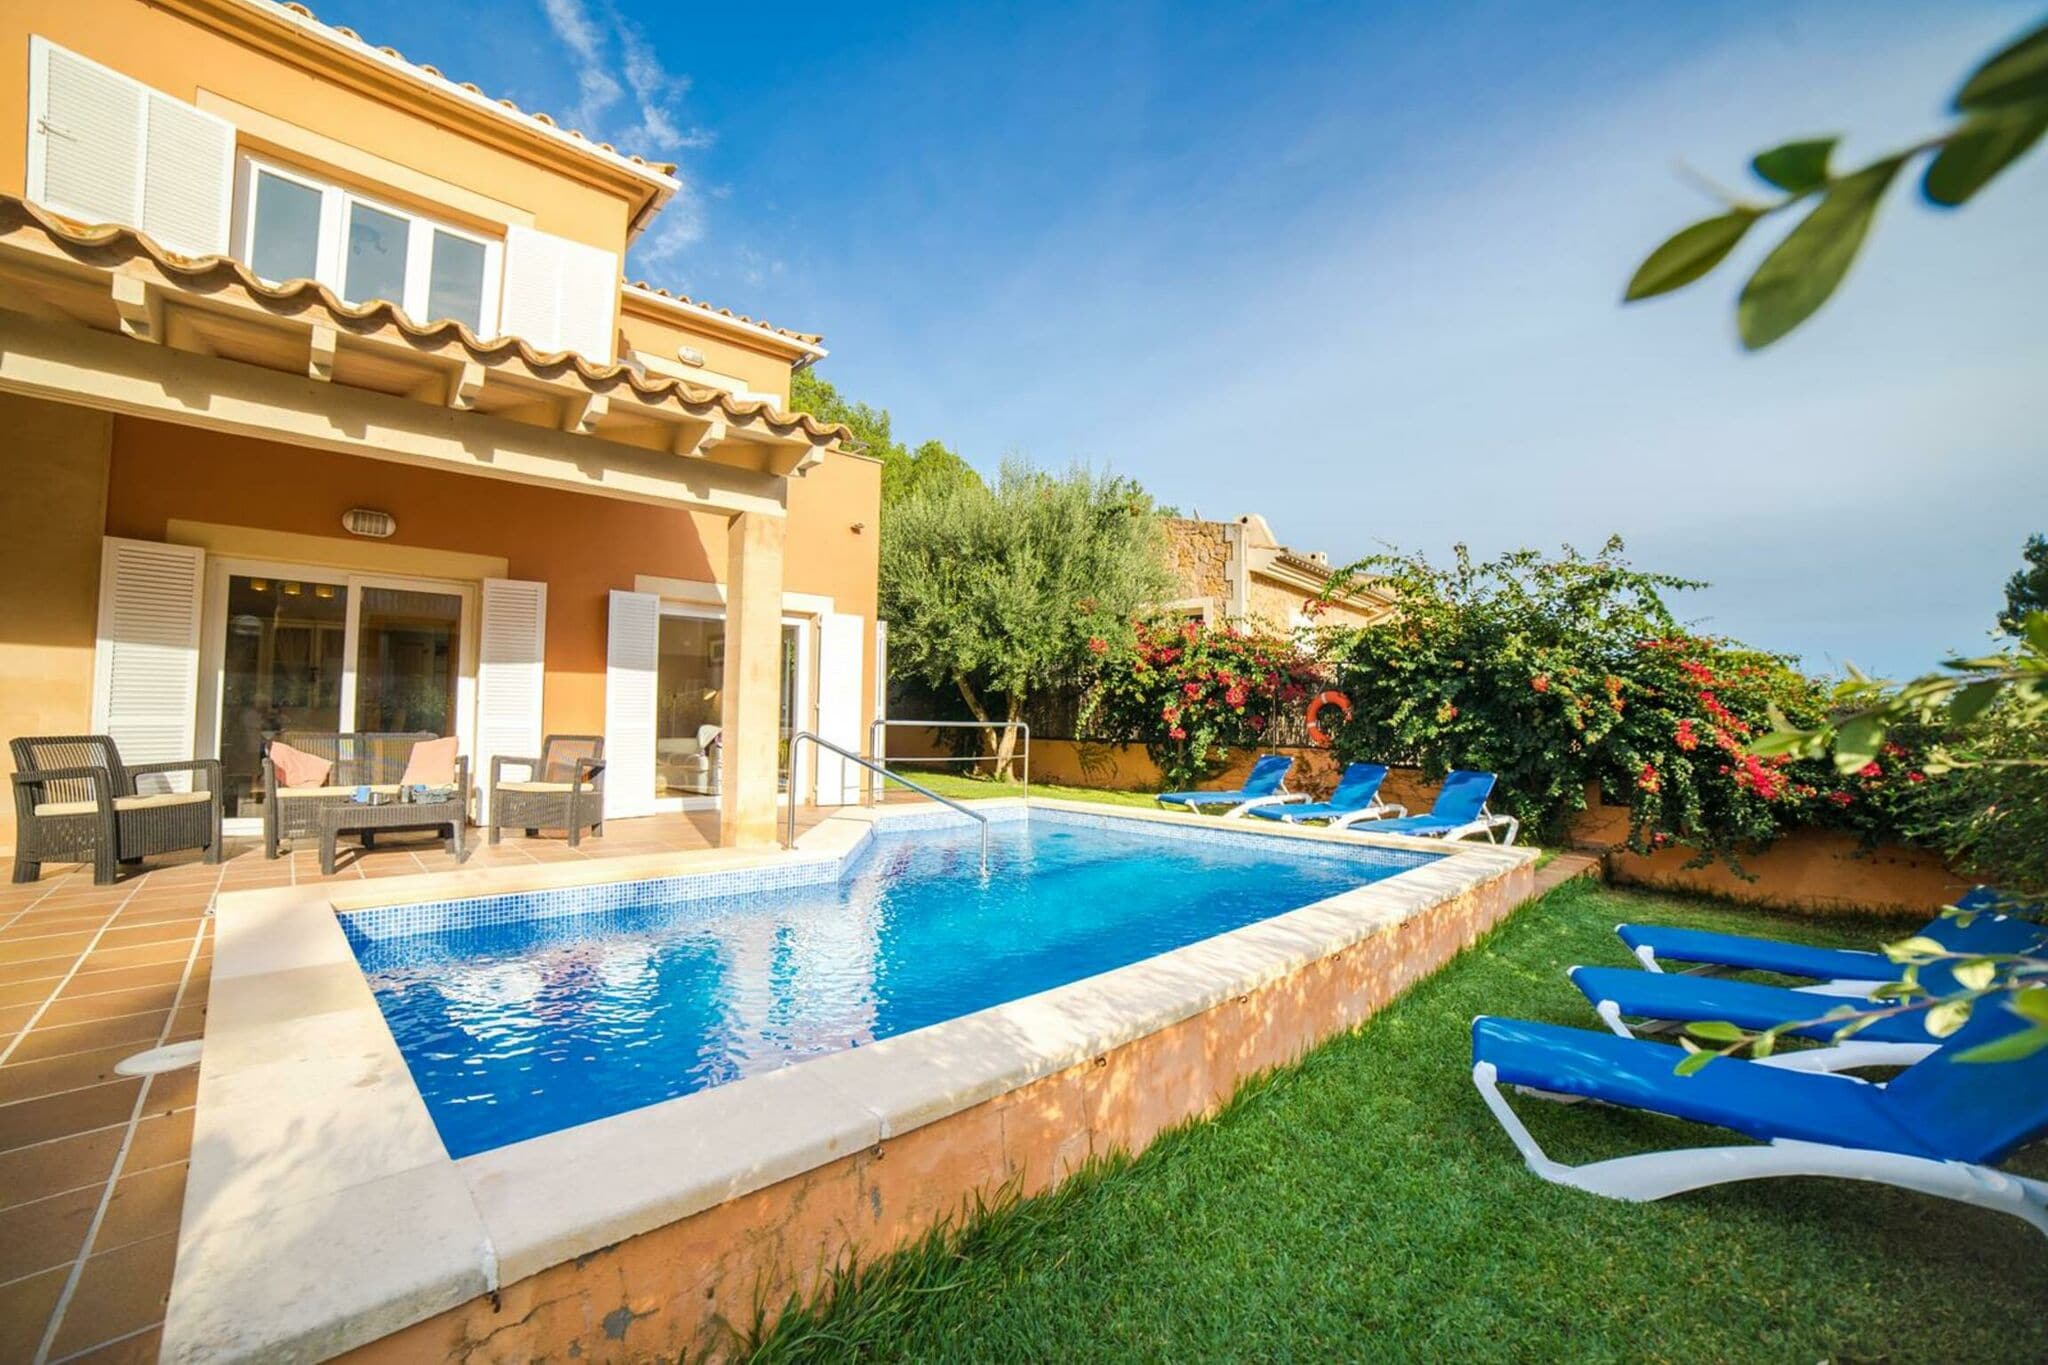 Ruime villa in Alcudia, Mallorca met privézwembad